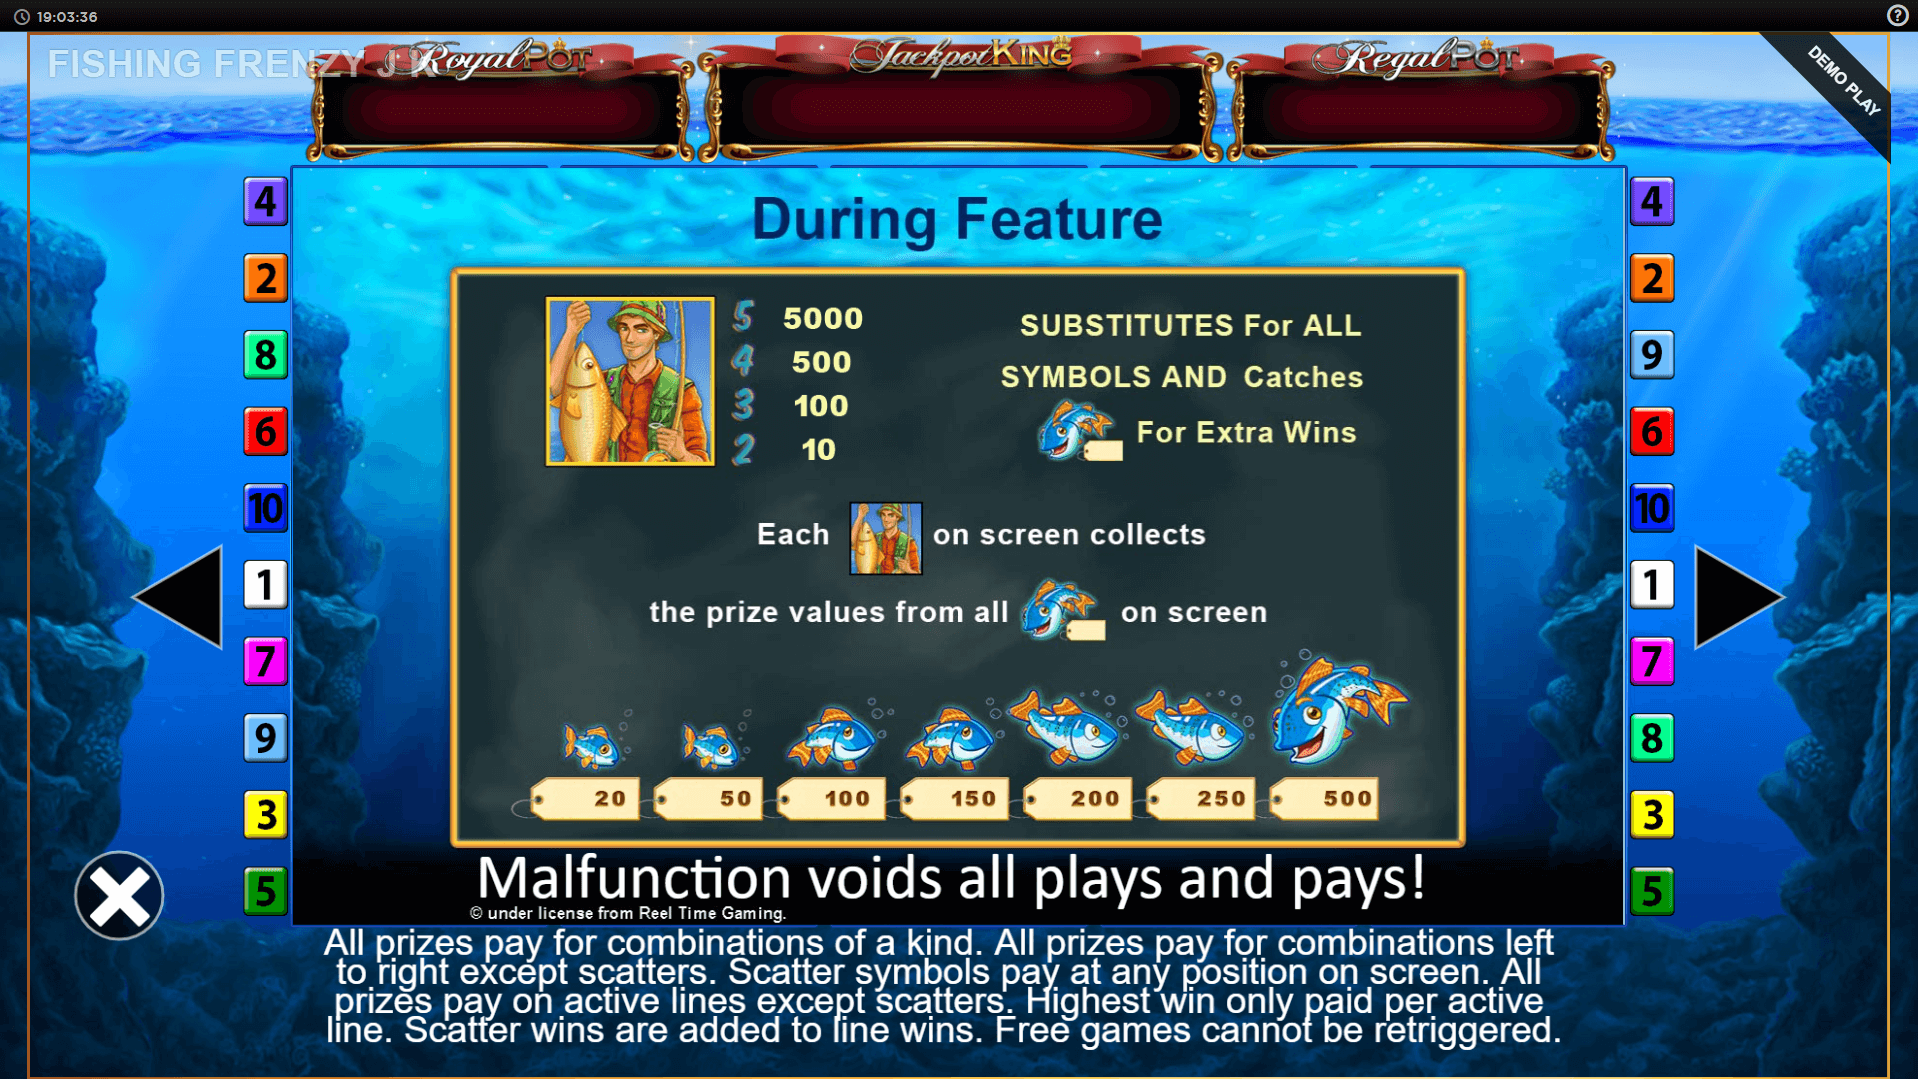 fishin frenzy jackpot king slot machine detail image 1